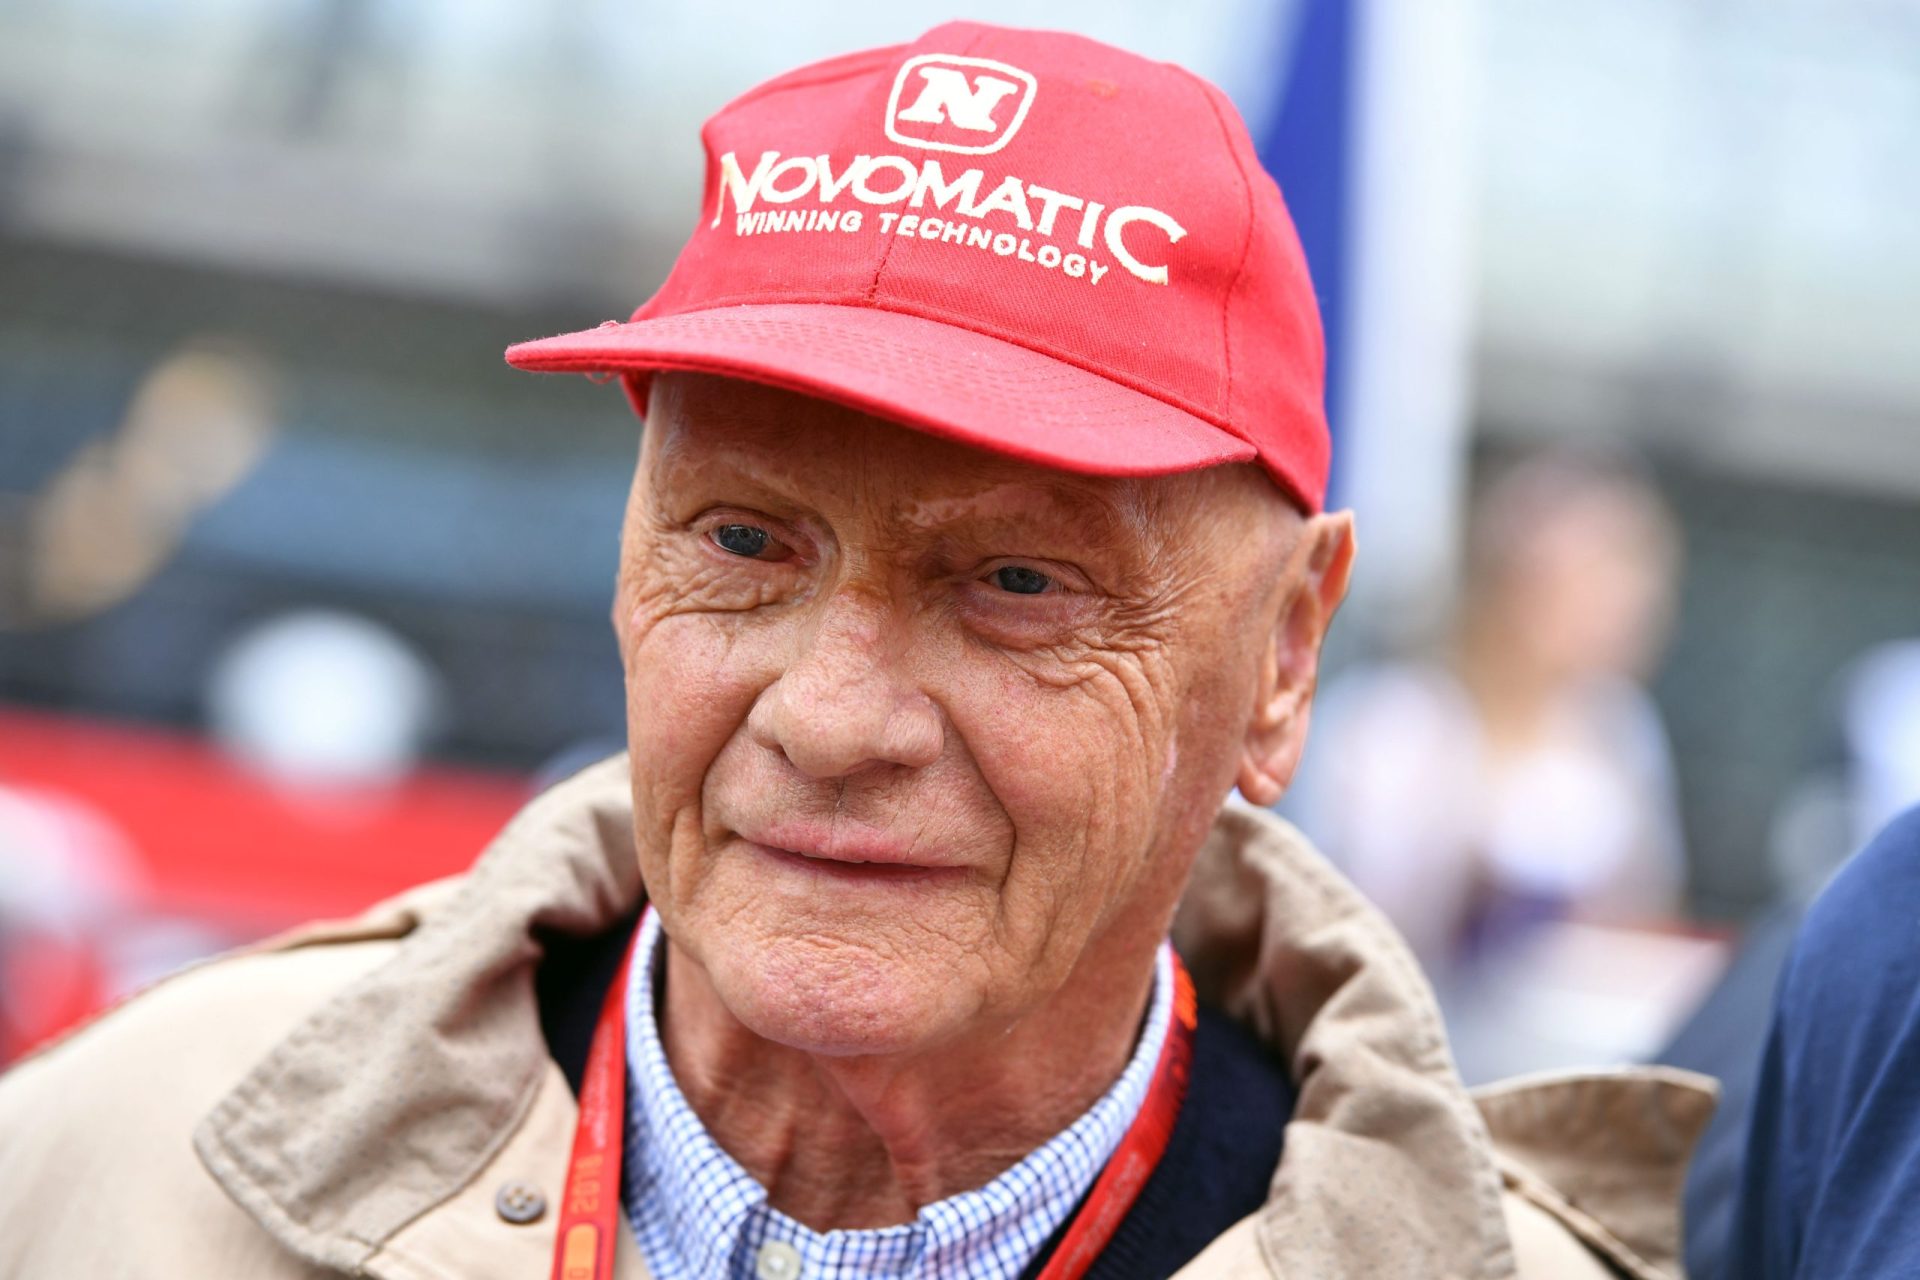 Morreu Niki Lauda, lenda da Fórmula 1